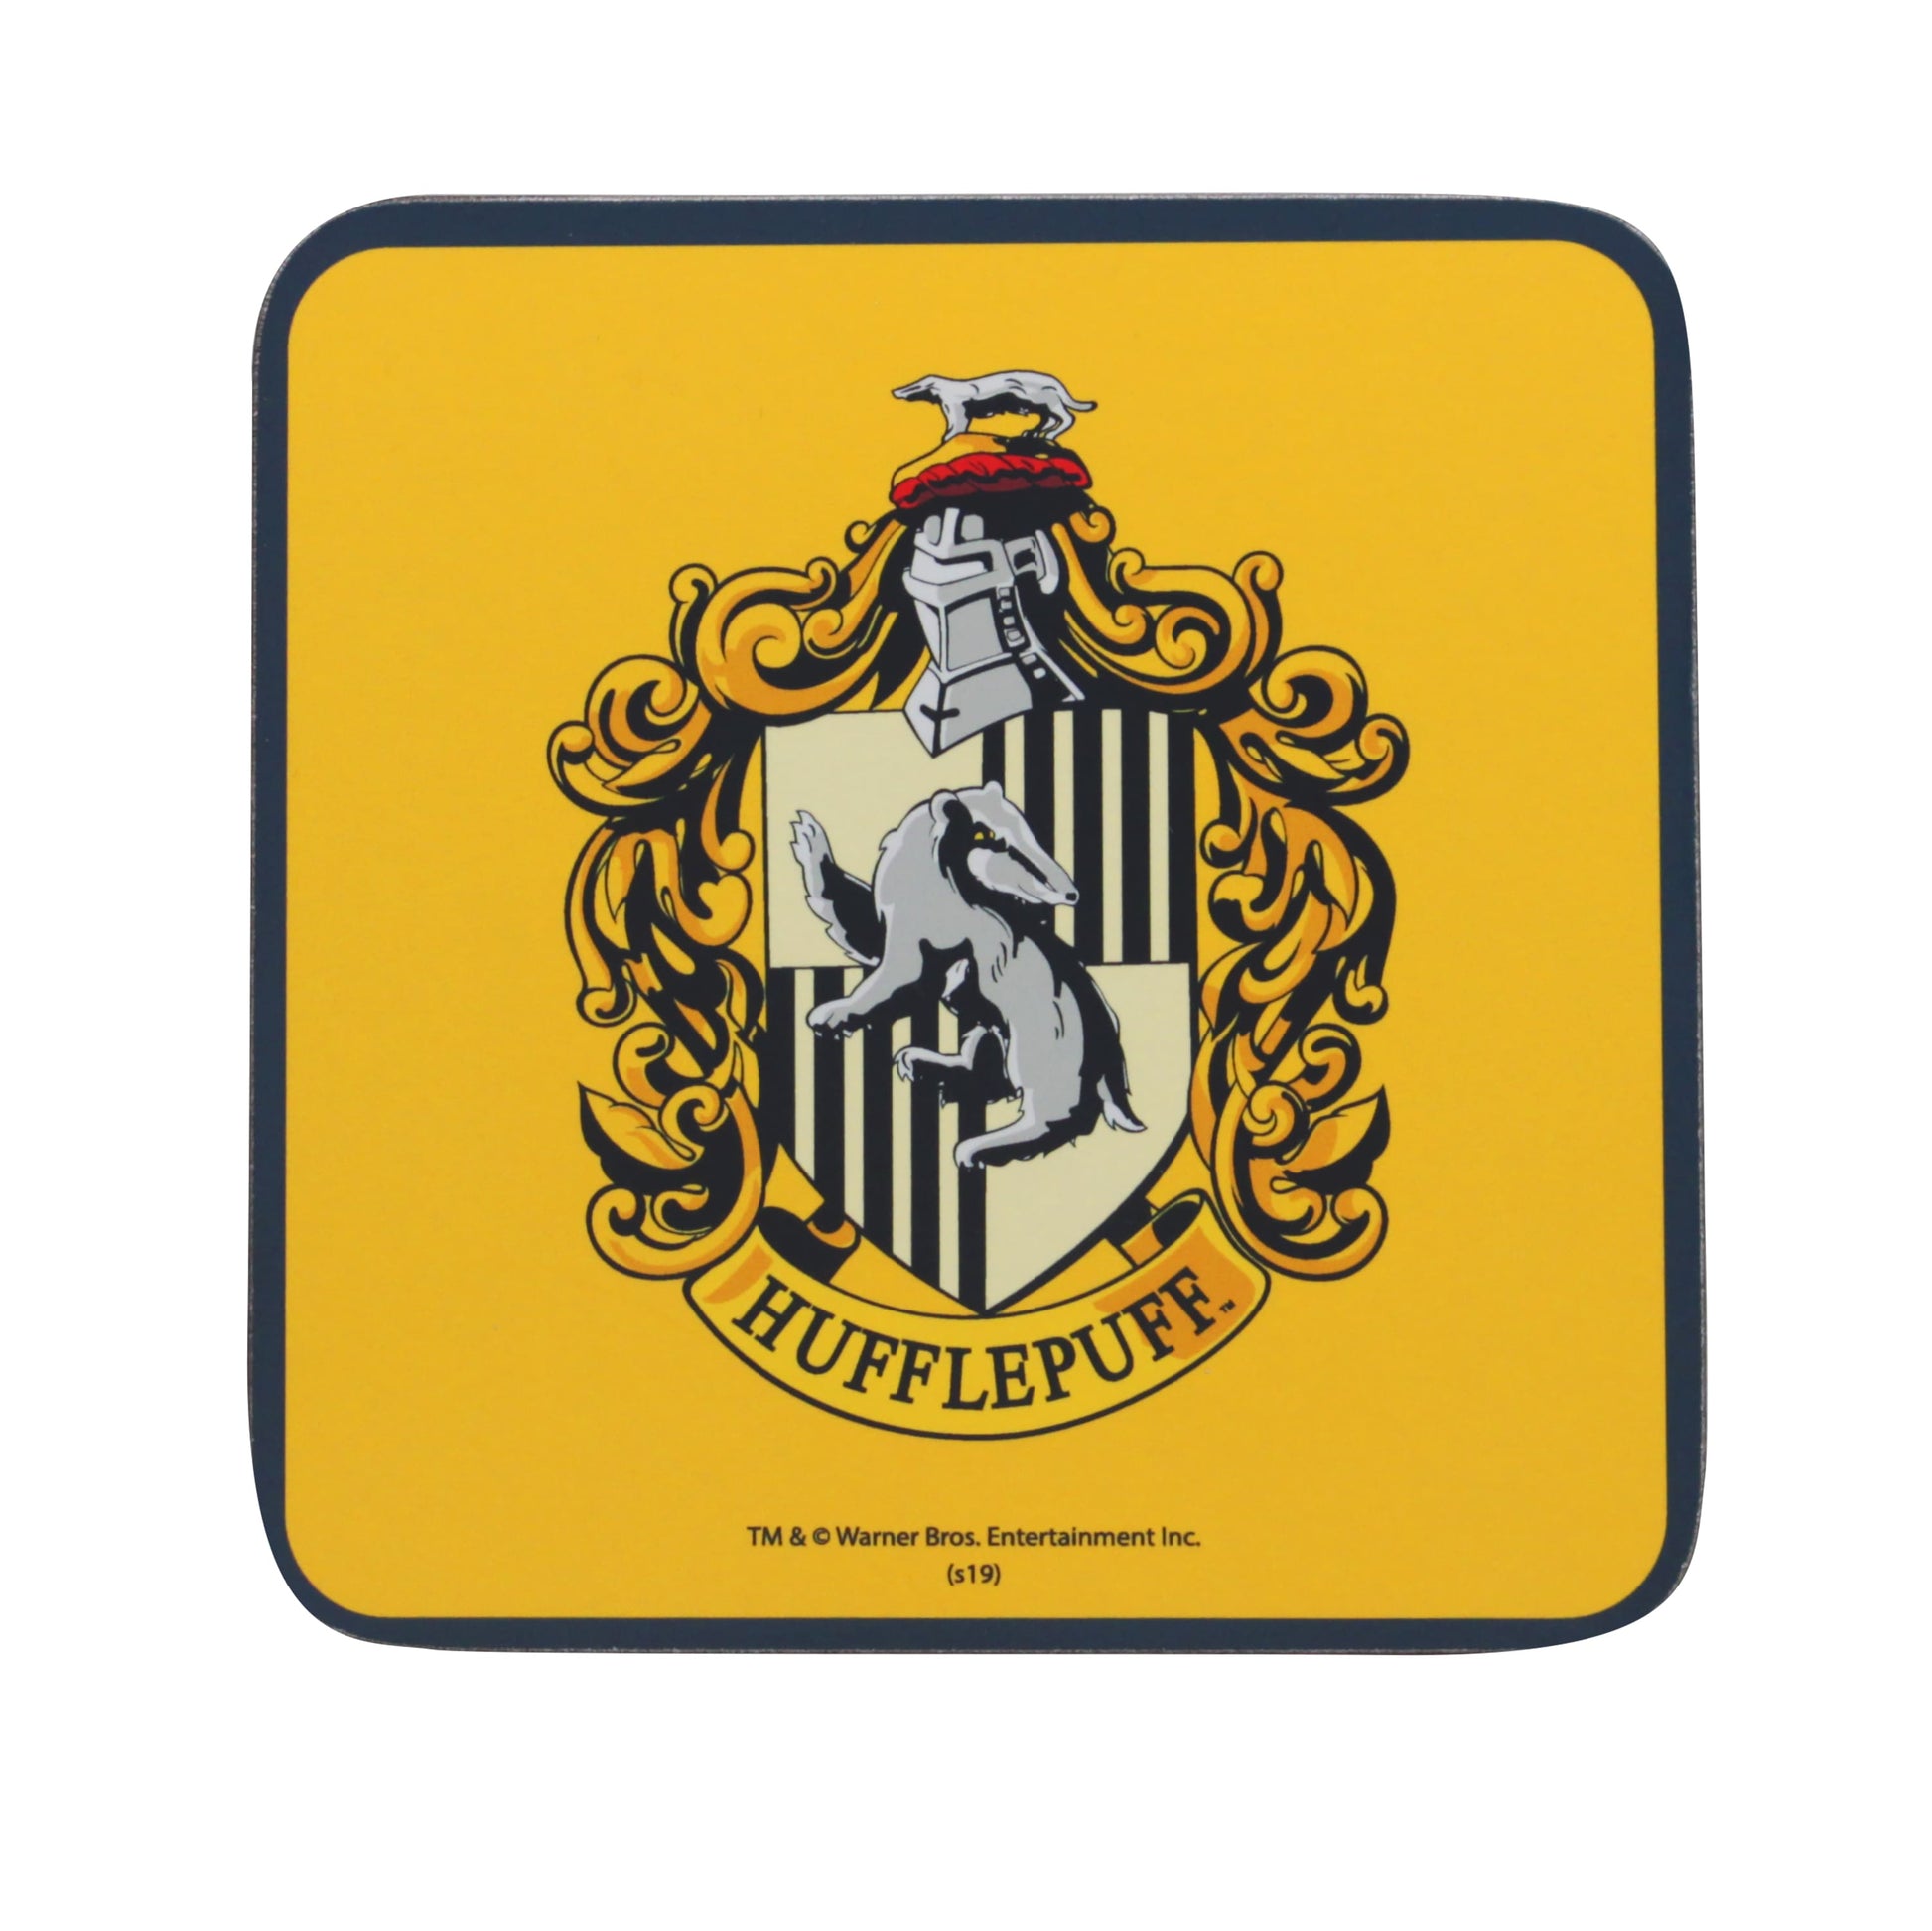 Hufflepuff Crest Coaster - Harry Potter - Hufflepuff Coaster Gifts